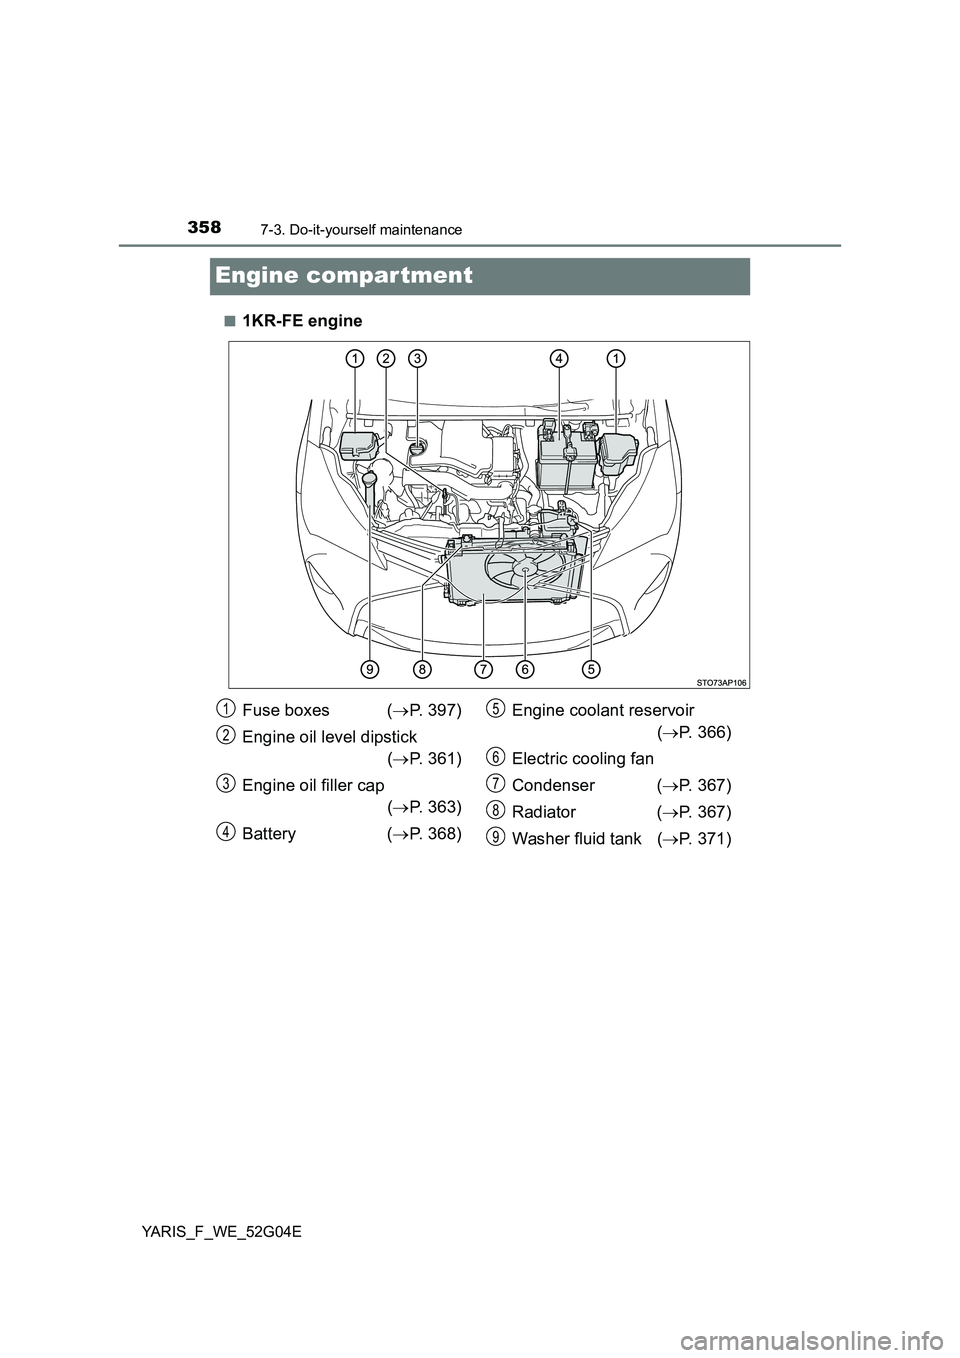 TOYOTA YARIS 2016  Owners Manual 3587-3. Do-it-yourself maintenance
YARIS_F_WE_52G04E
Engine compar tment
■1KR-FE engine
Fuse boxes  (P. 397) 
Engine oil level dipstick 
( P. 361) 
Engine oil filler cap  
( P. 363) 
Batter